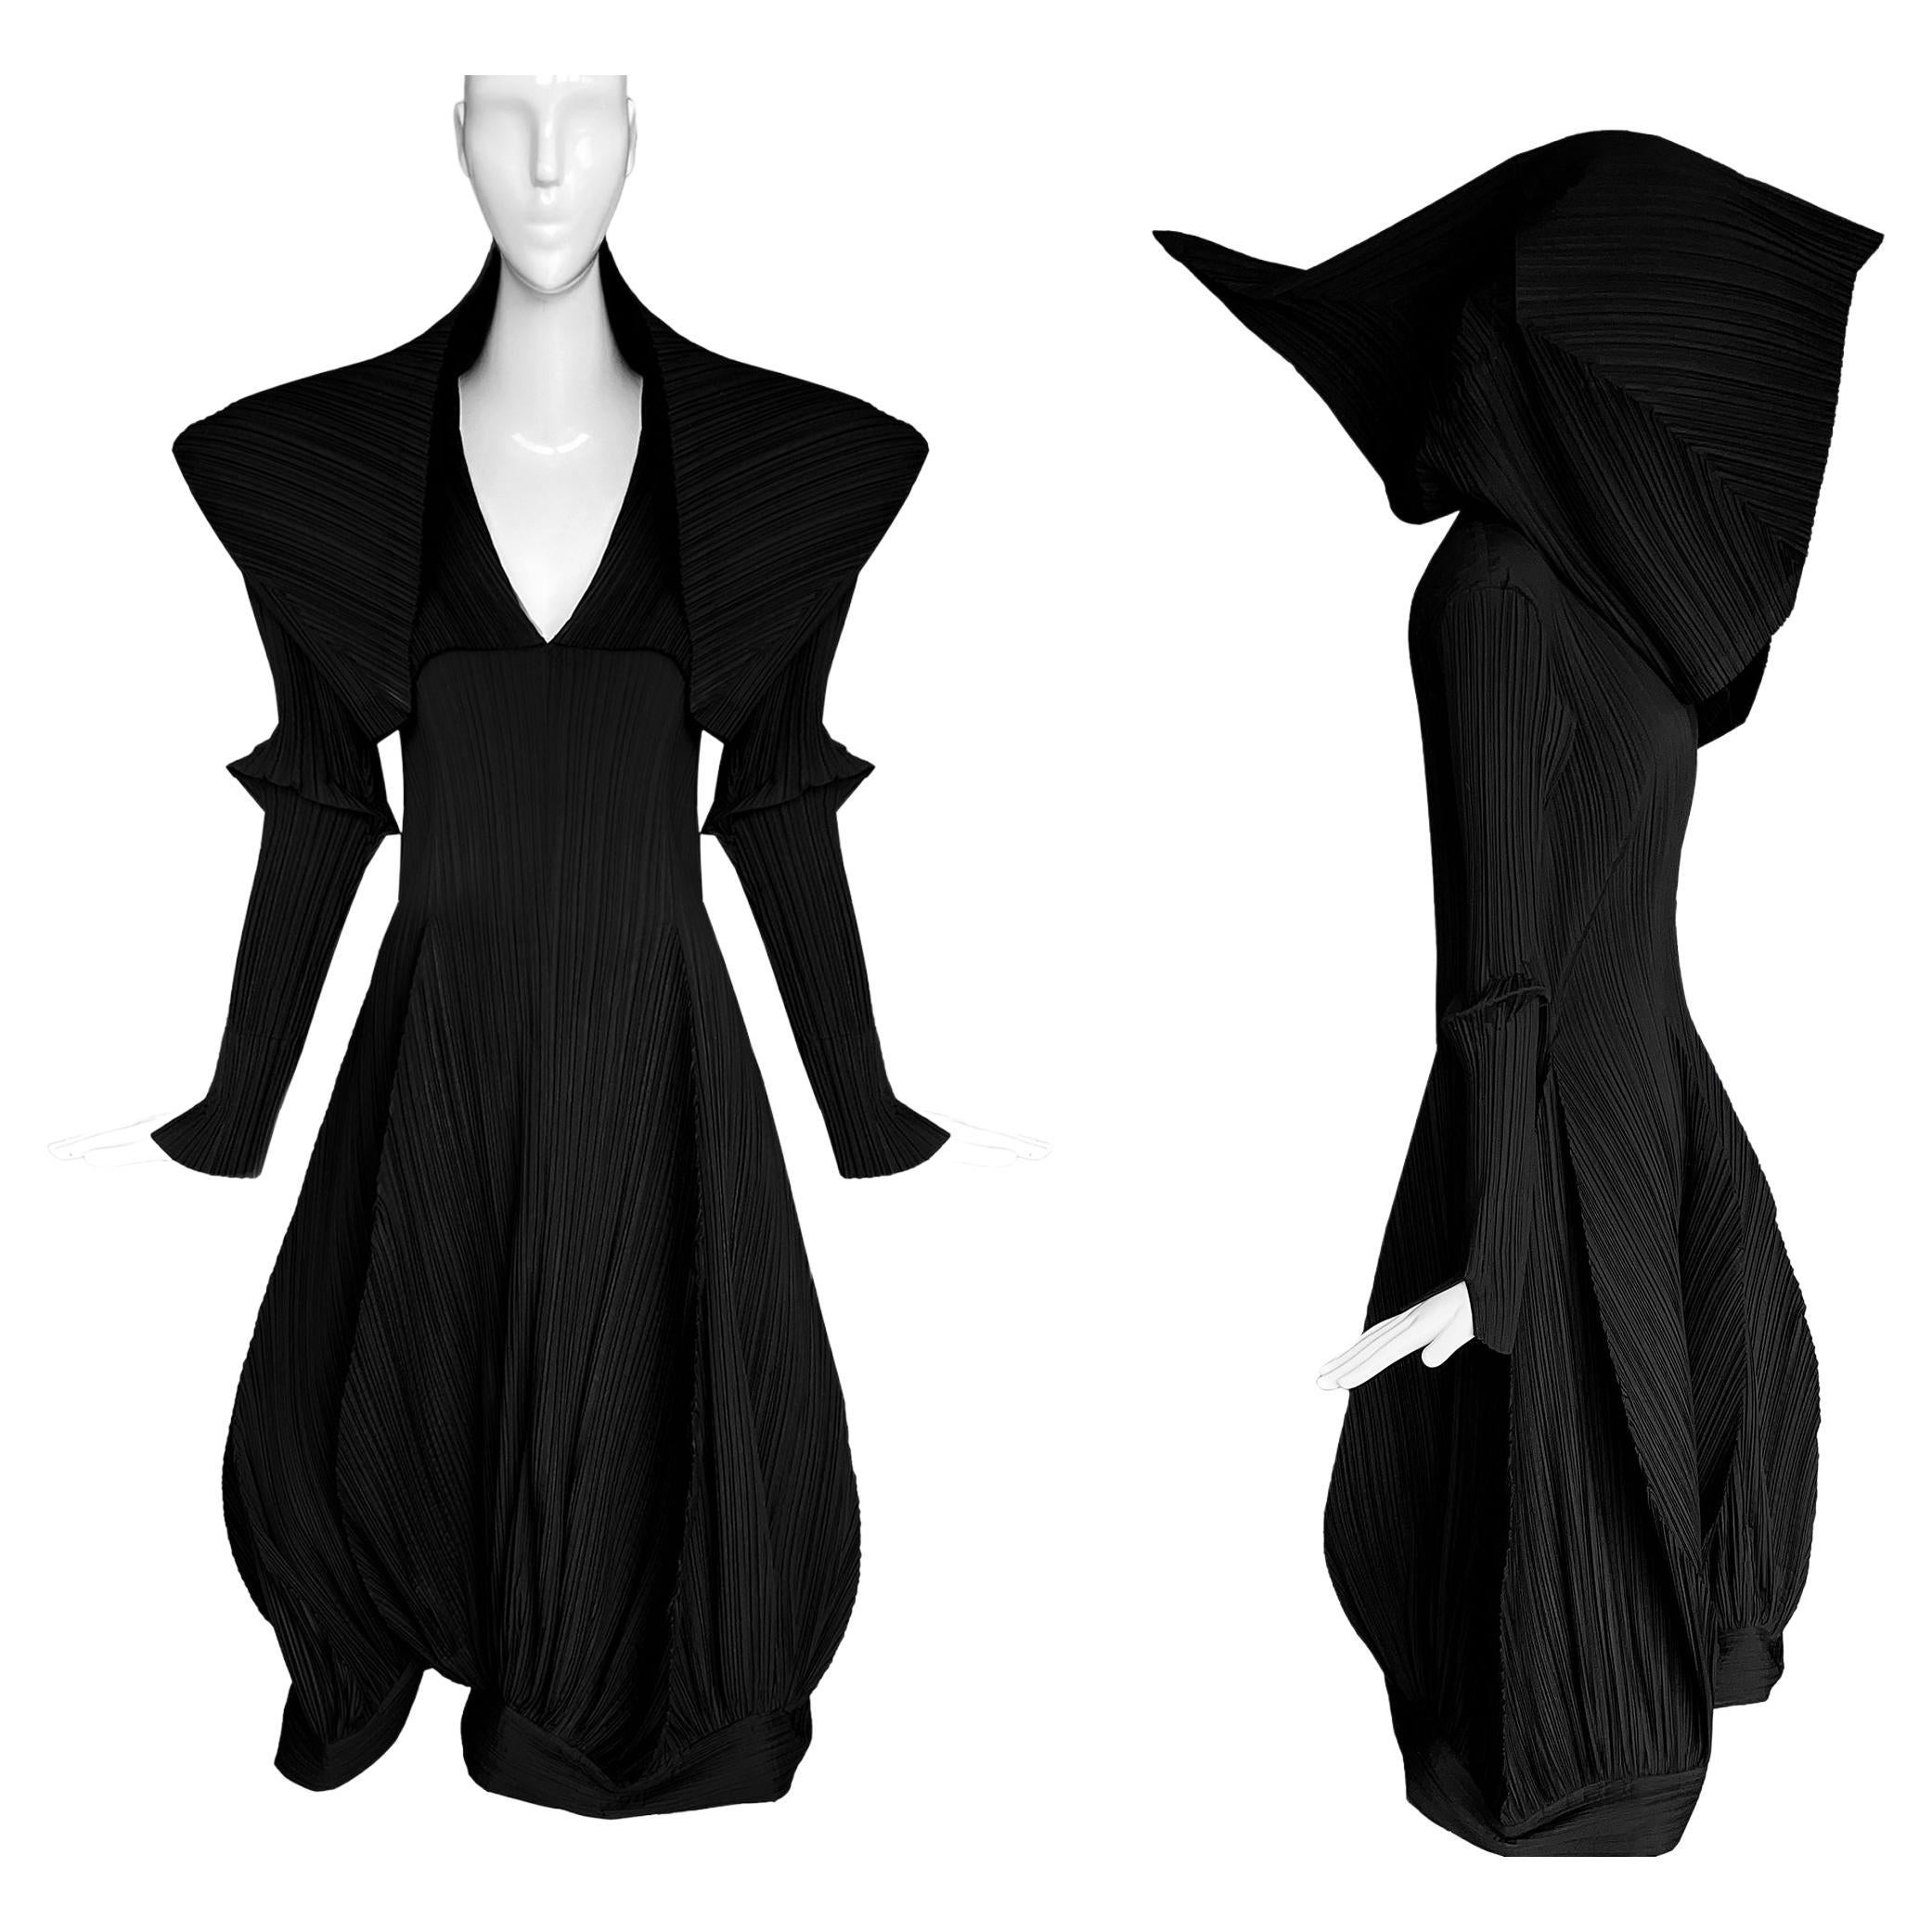 Iconic ISSEY MIYAKE Tulip Dress Black Sculptural Editorial Dramatic